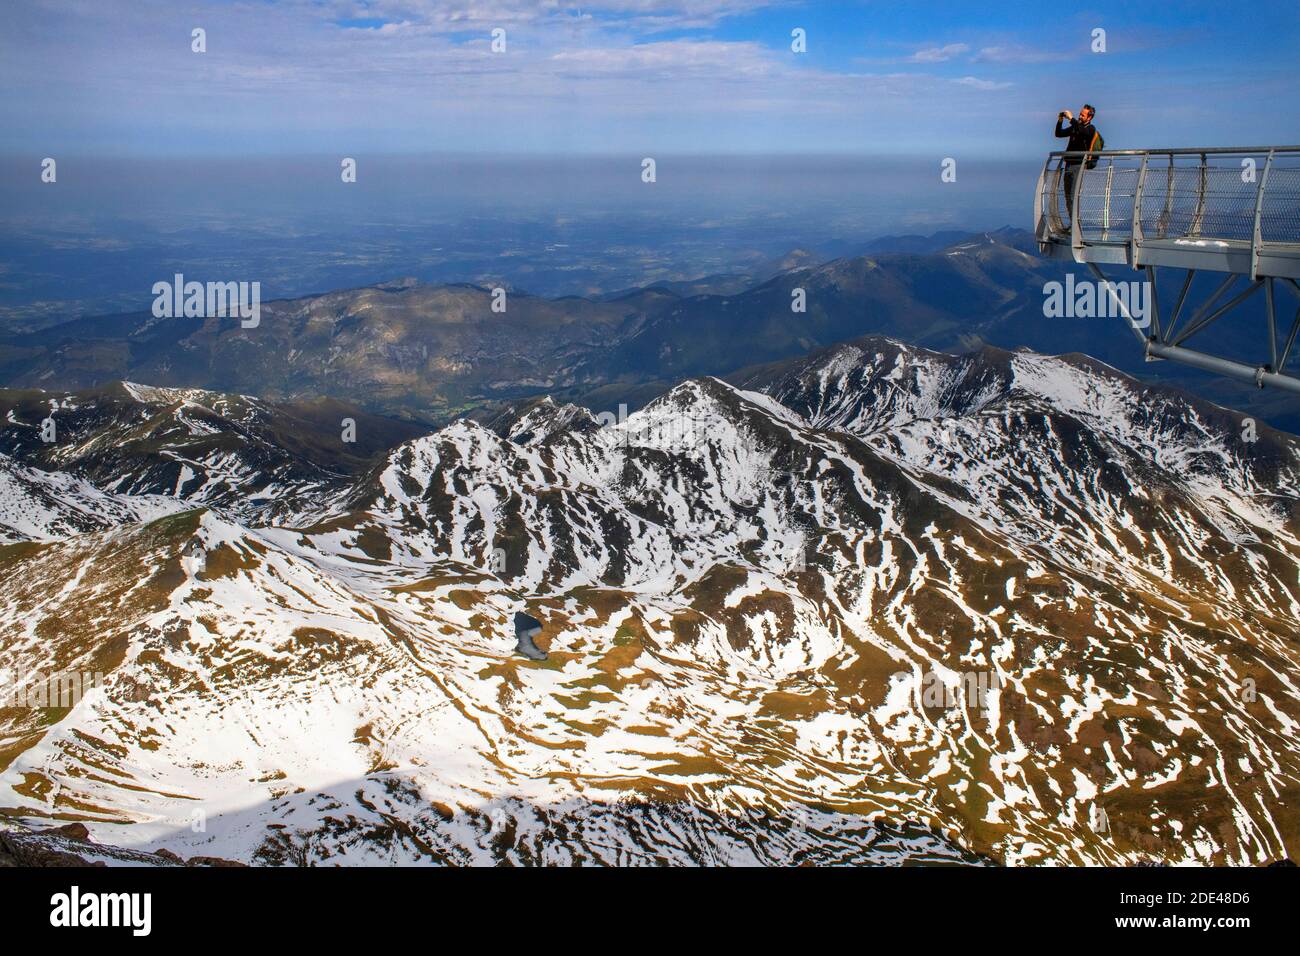 Aussichtspunkt des Observatoriums von Pic Du Midi De Bigorre, Hautes Pyrenees, Midi Pyrenees, Frankreich. Der 12m hohe Ponton dans le ciel, ein Glasgang hoch abo Stockfoto